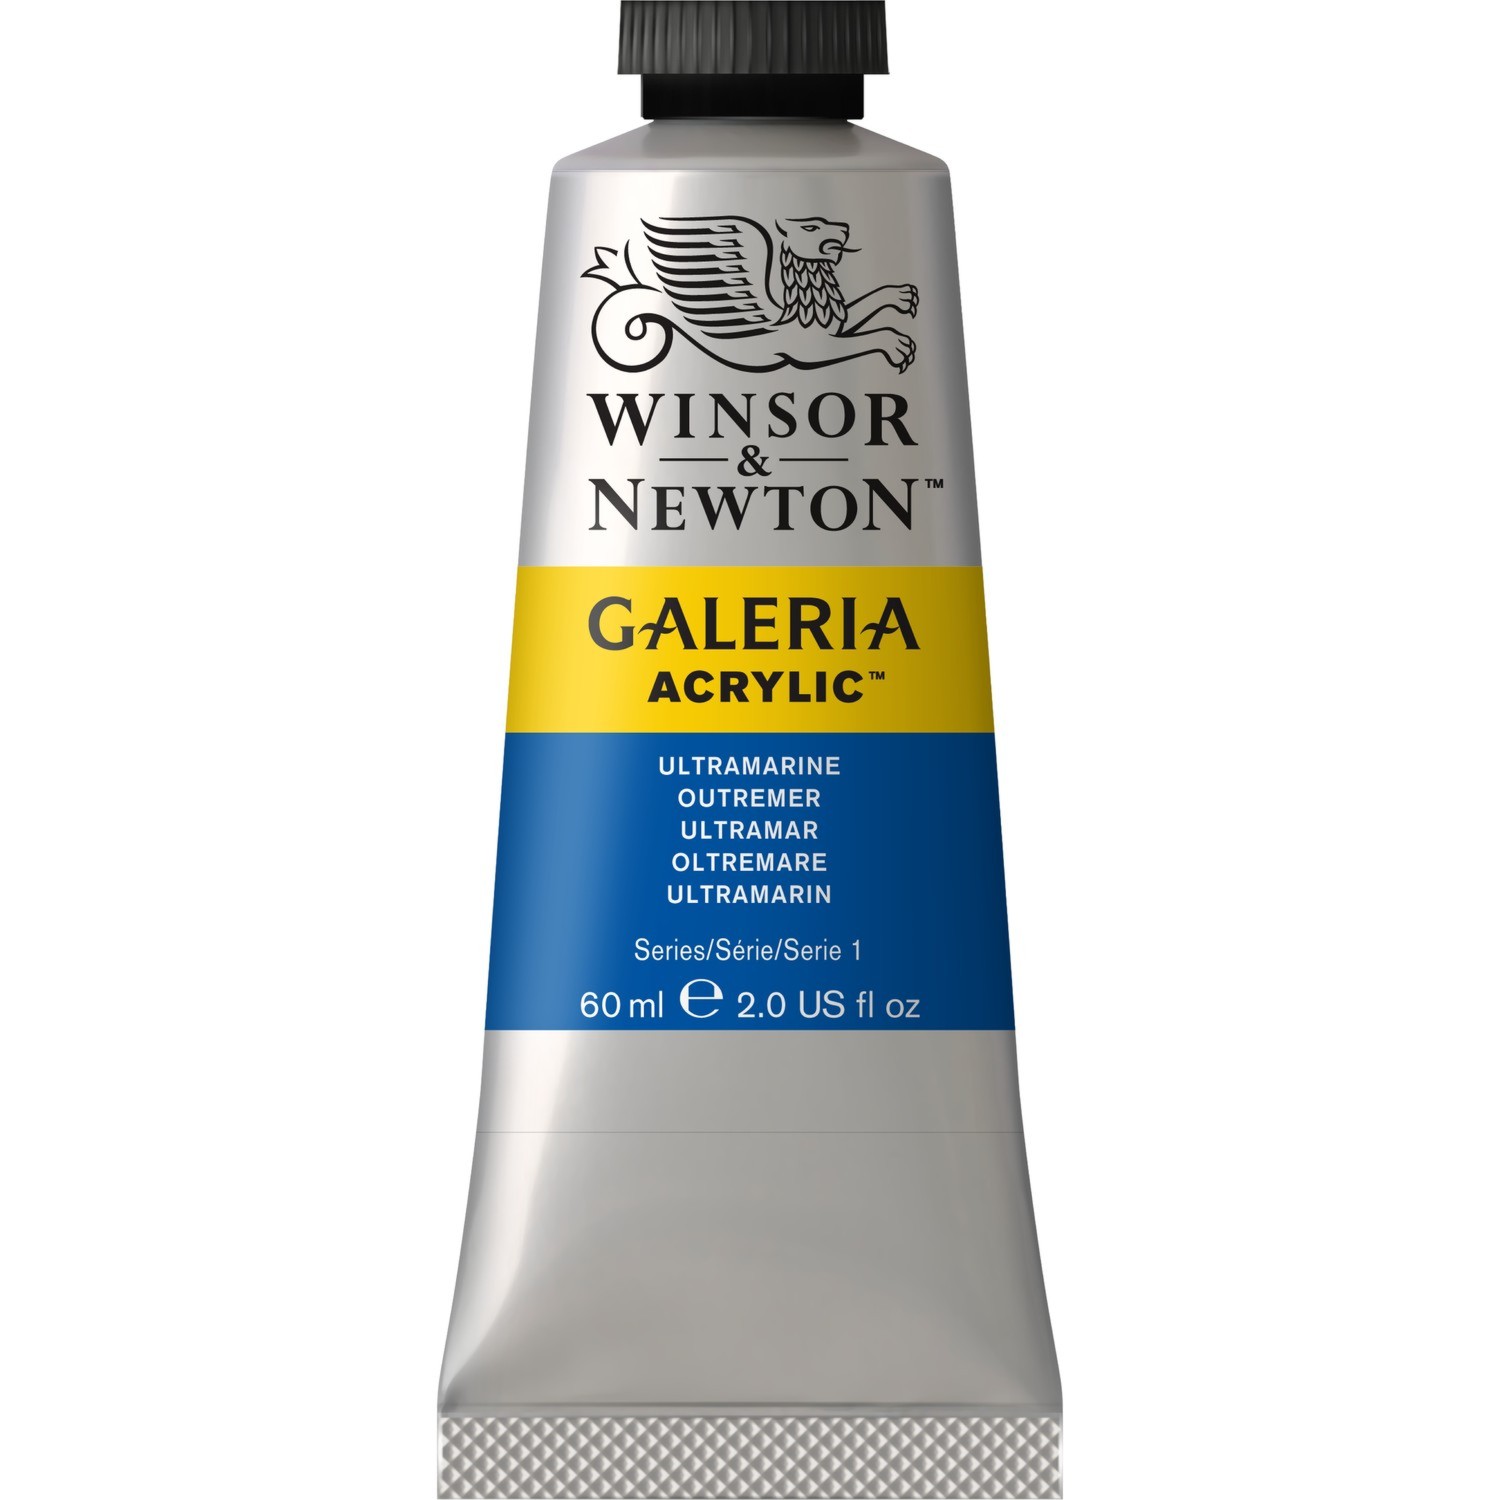 Winsor and Newton 60ml Galeria Acrylic Paint - Ultramarine Image 1